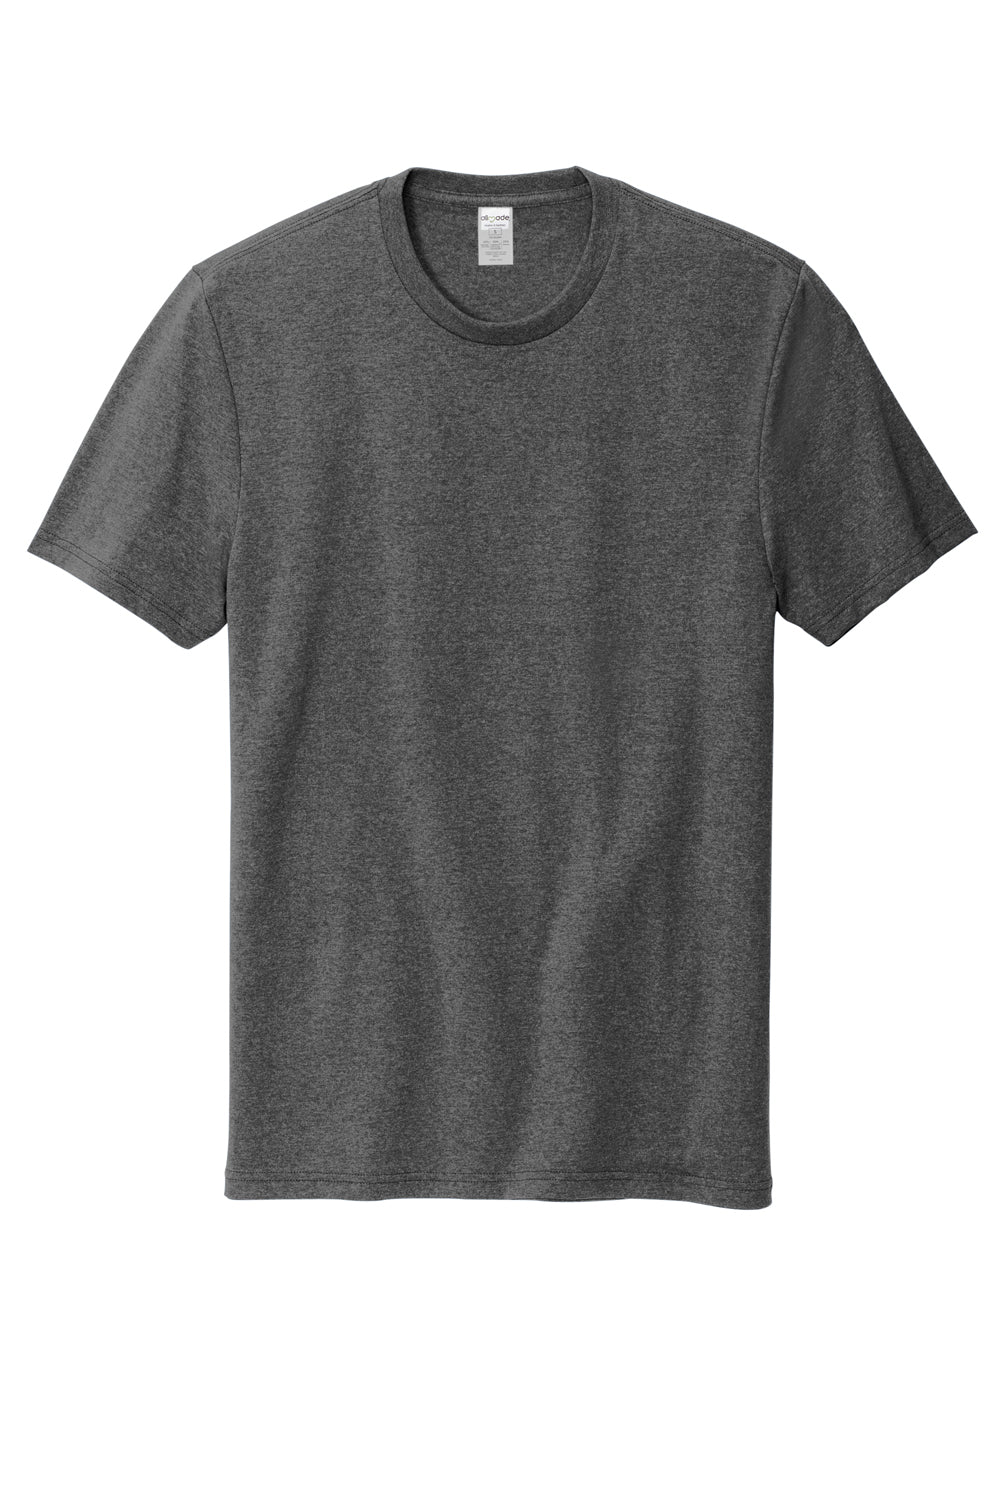 Allmade AL2300 Mens Recycled Short Sleeve Crewneck T-Shirt Heather Charcoal Grey Flat Front